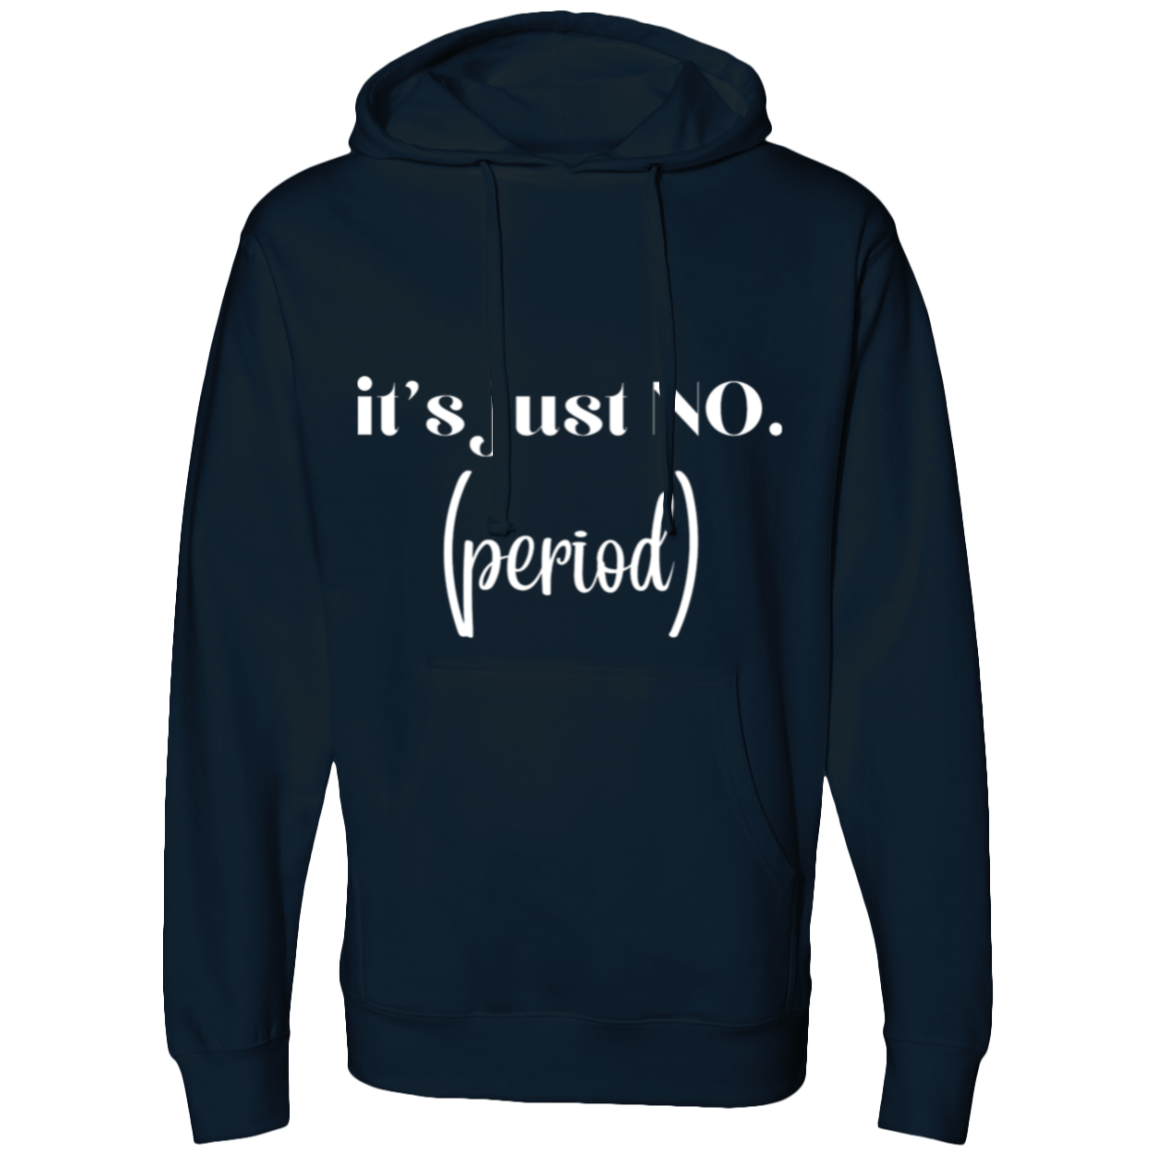 it's just no. (period) Hooded Sweatshirt